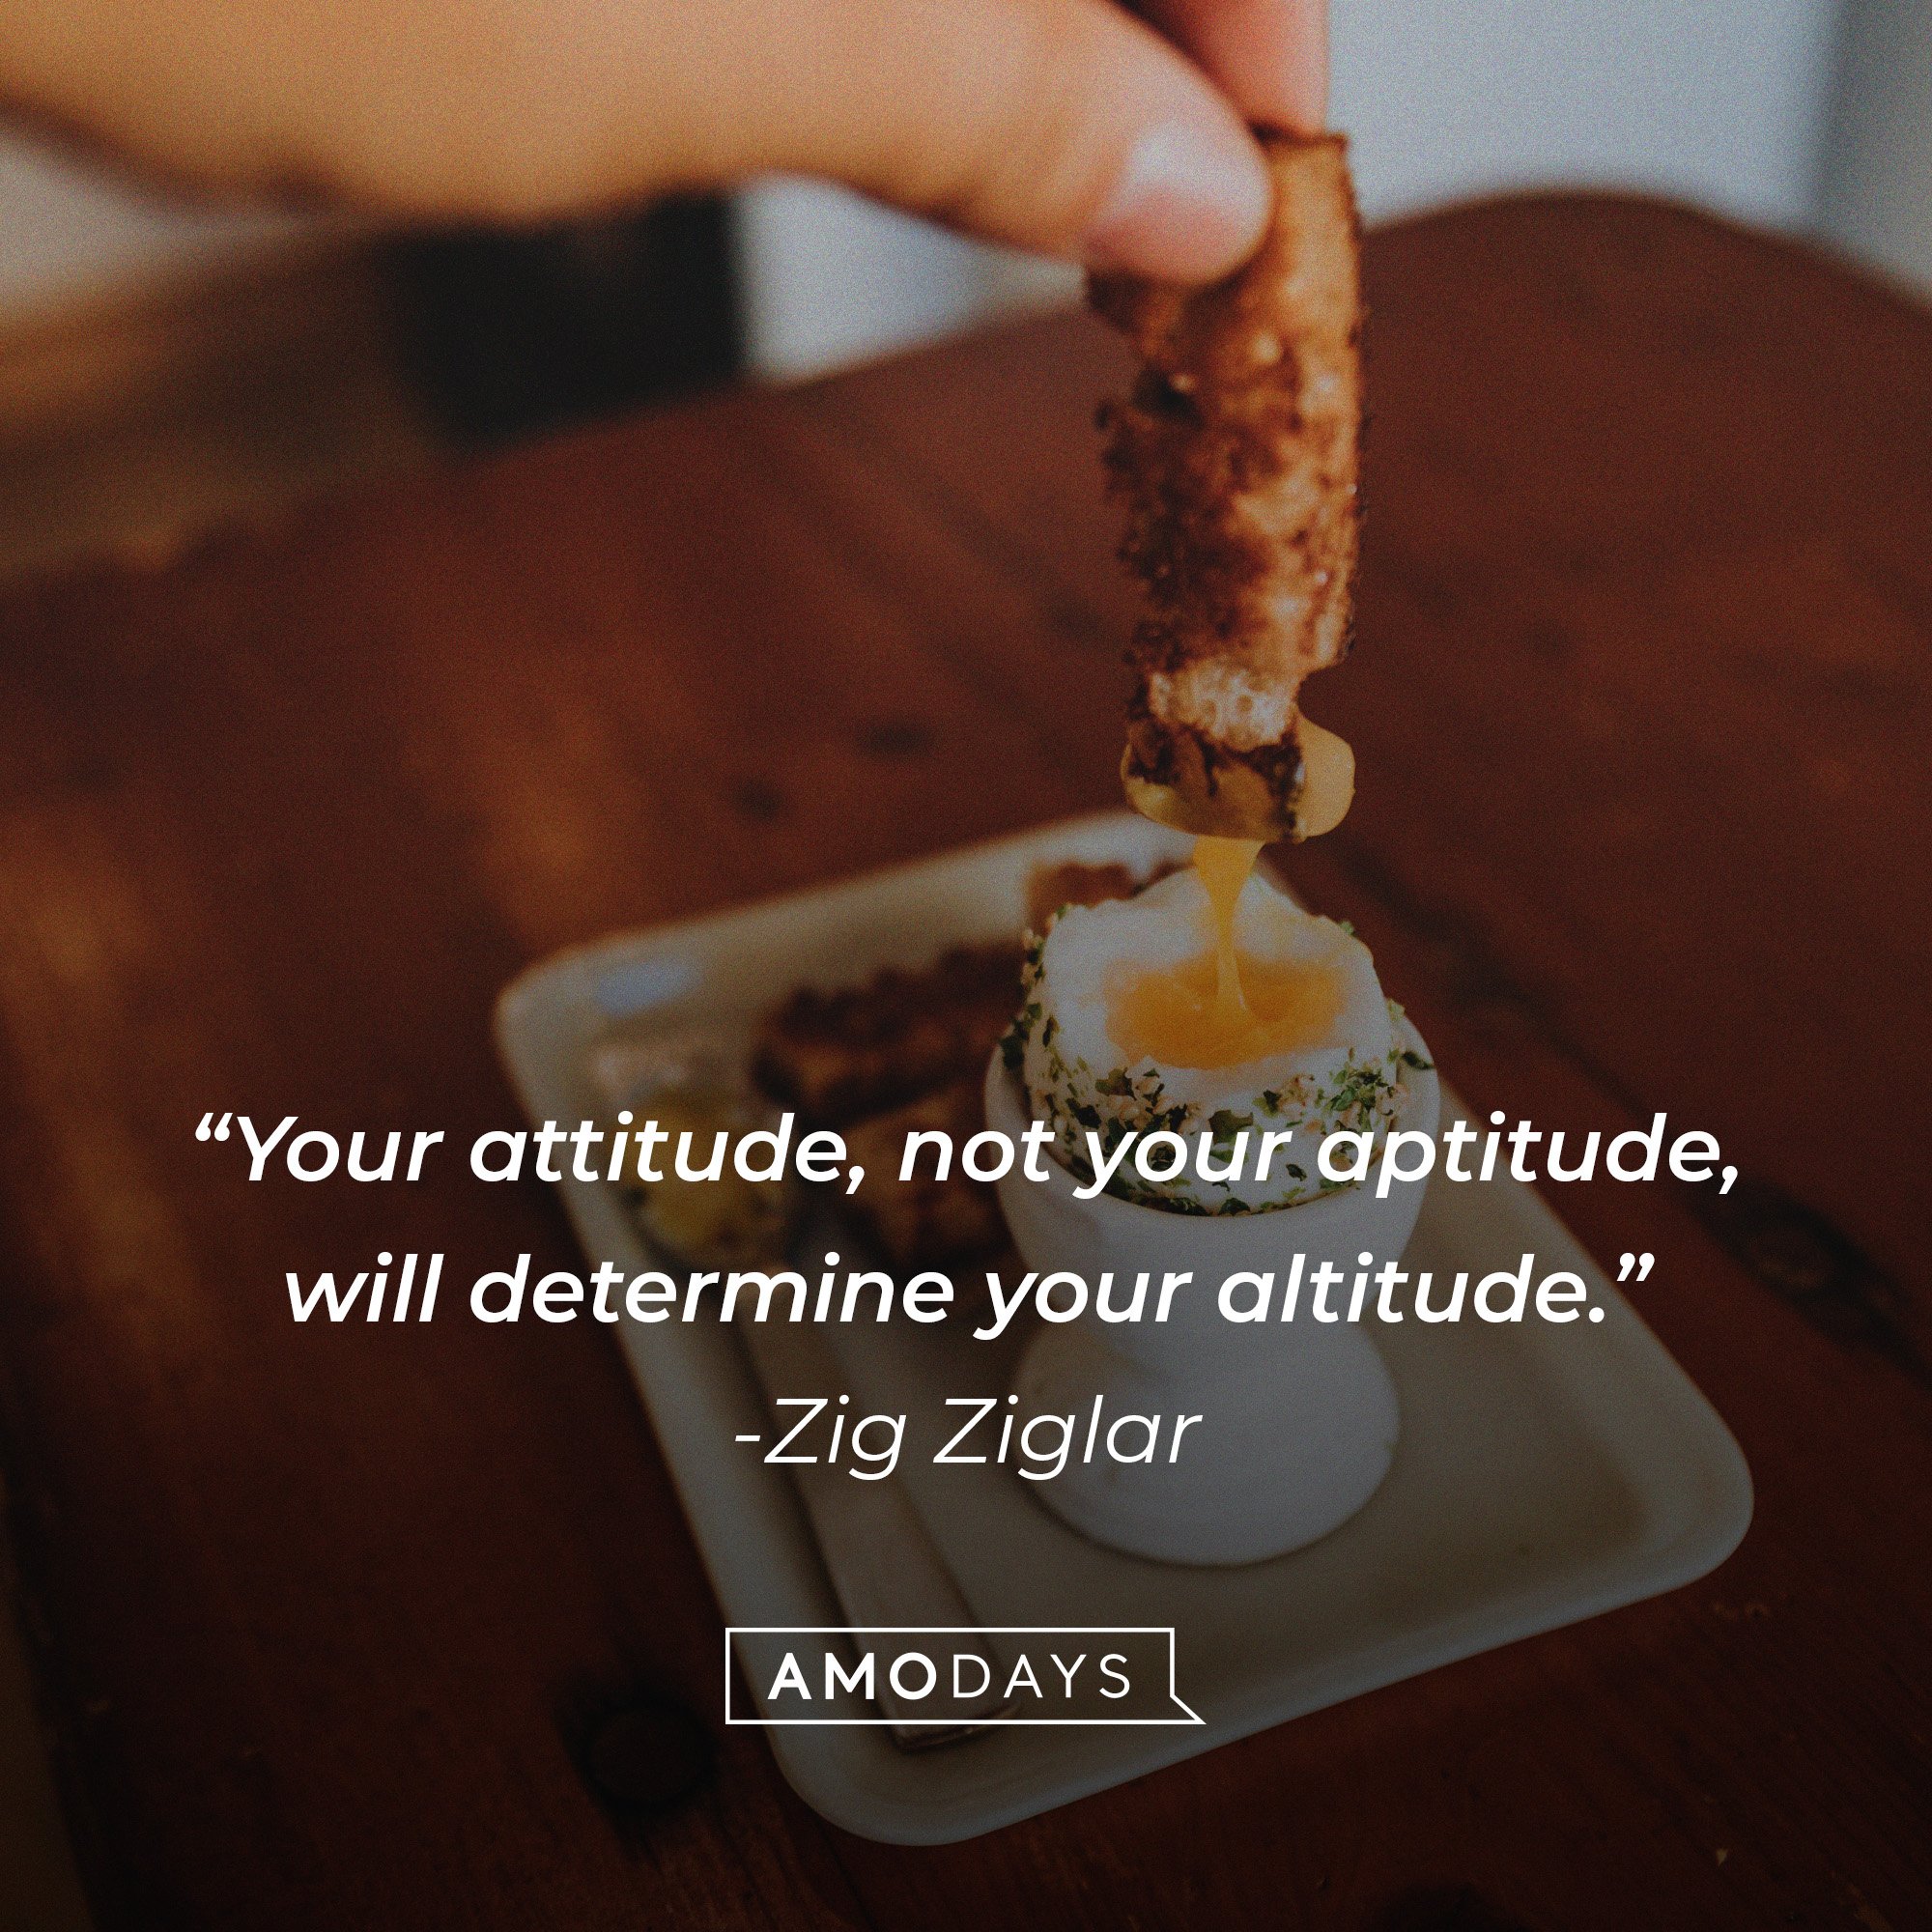 Zig Ziglar's quote: “Your attitude, not your aptitude, will determine your altitude.” | Image: AmoDays 